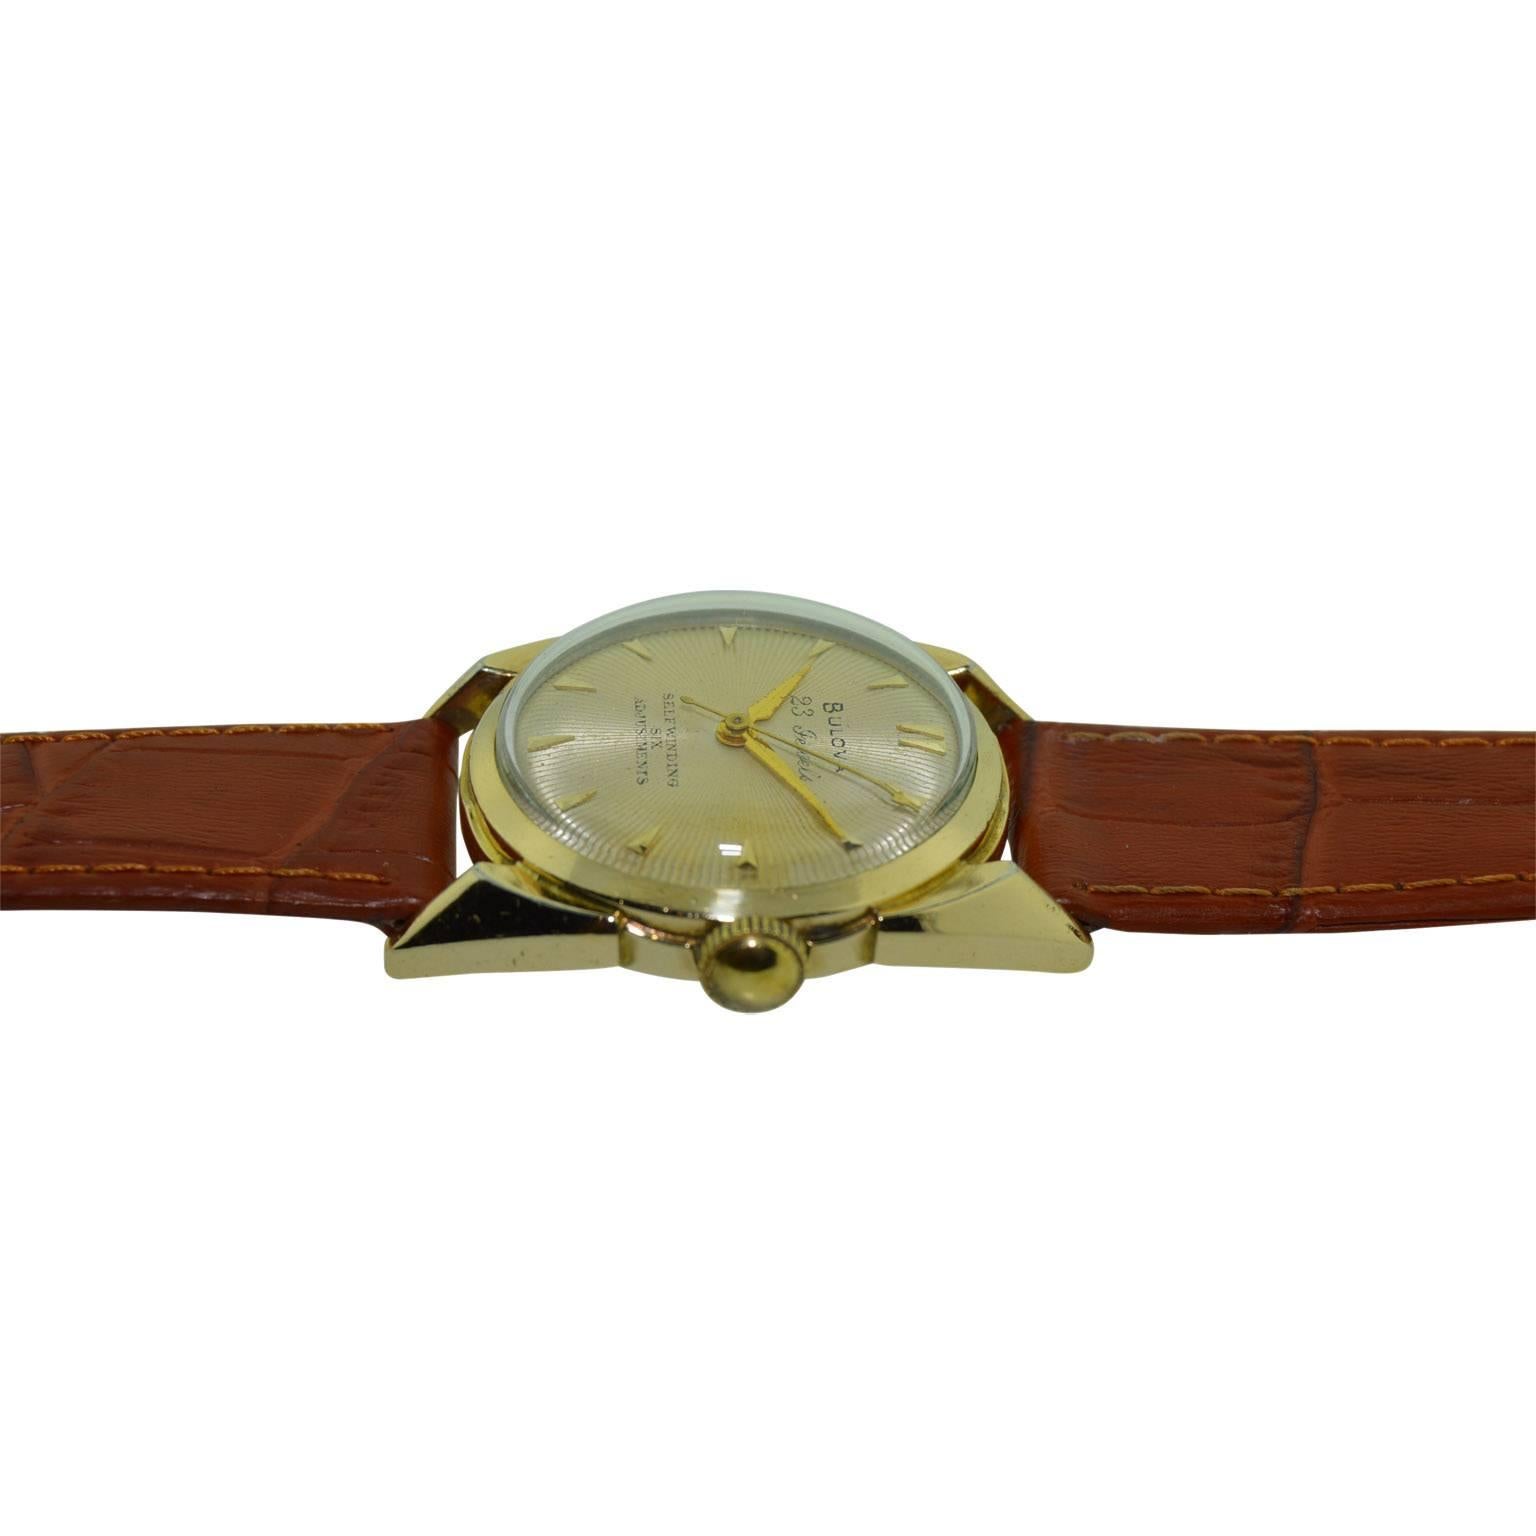 1950's bulova self winding watch